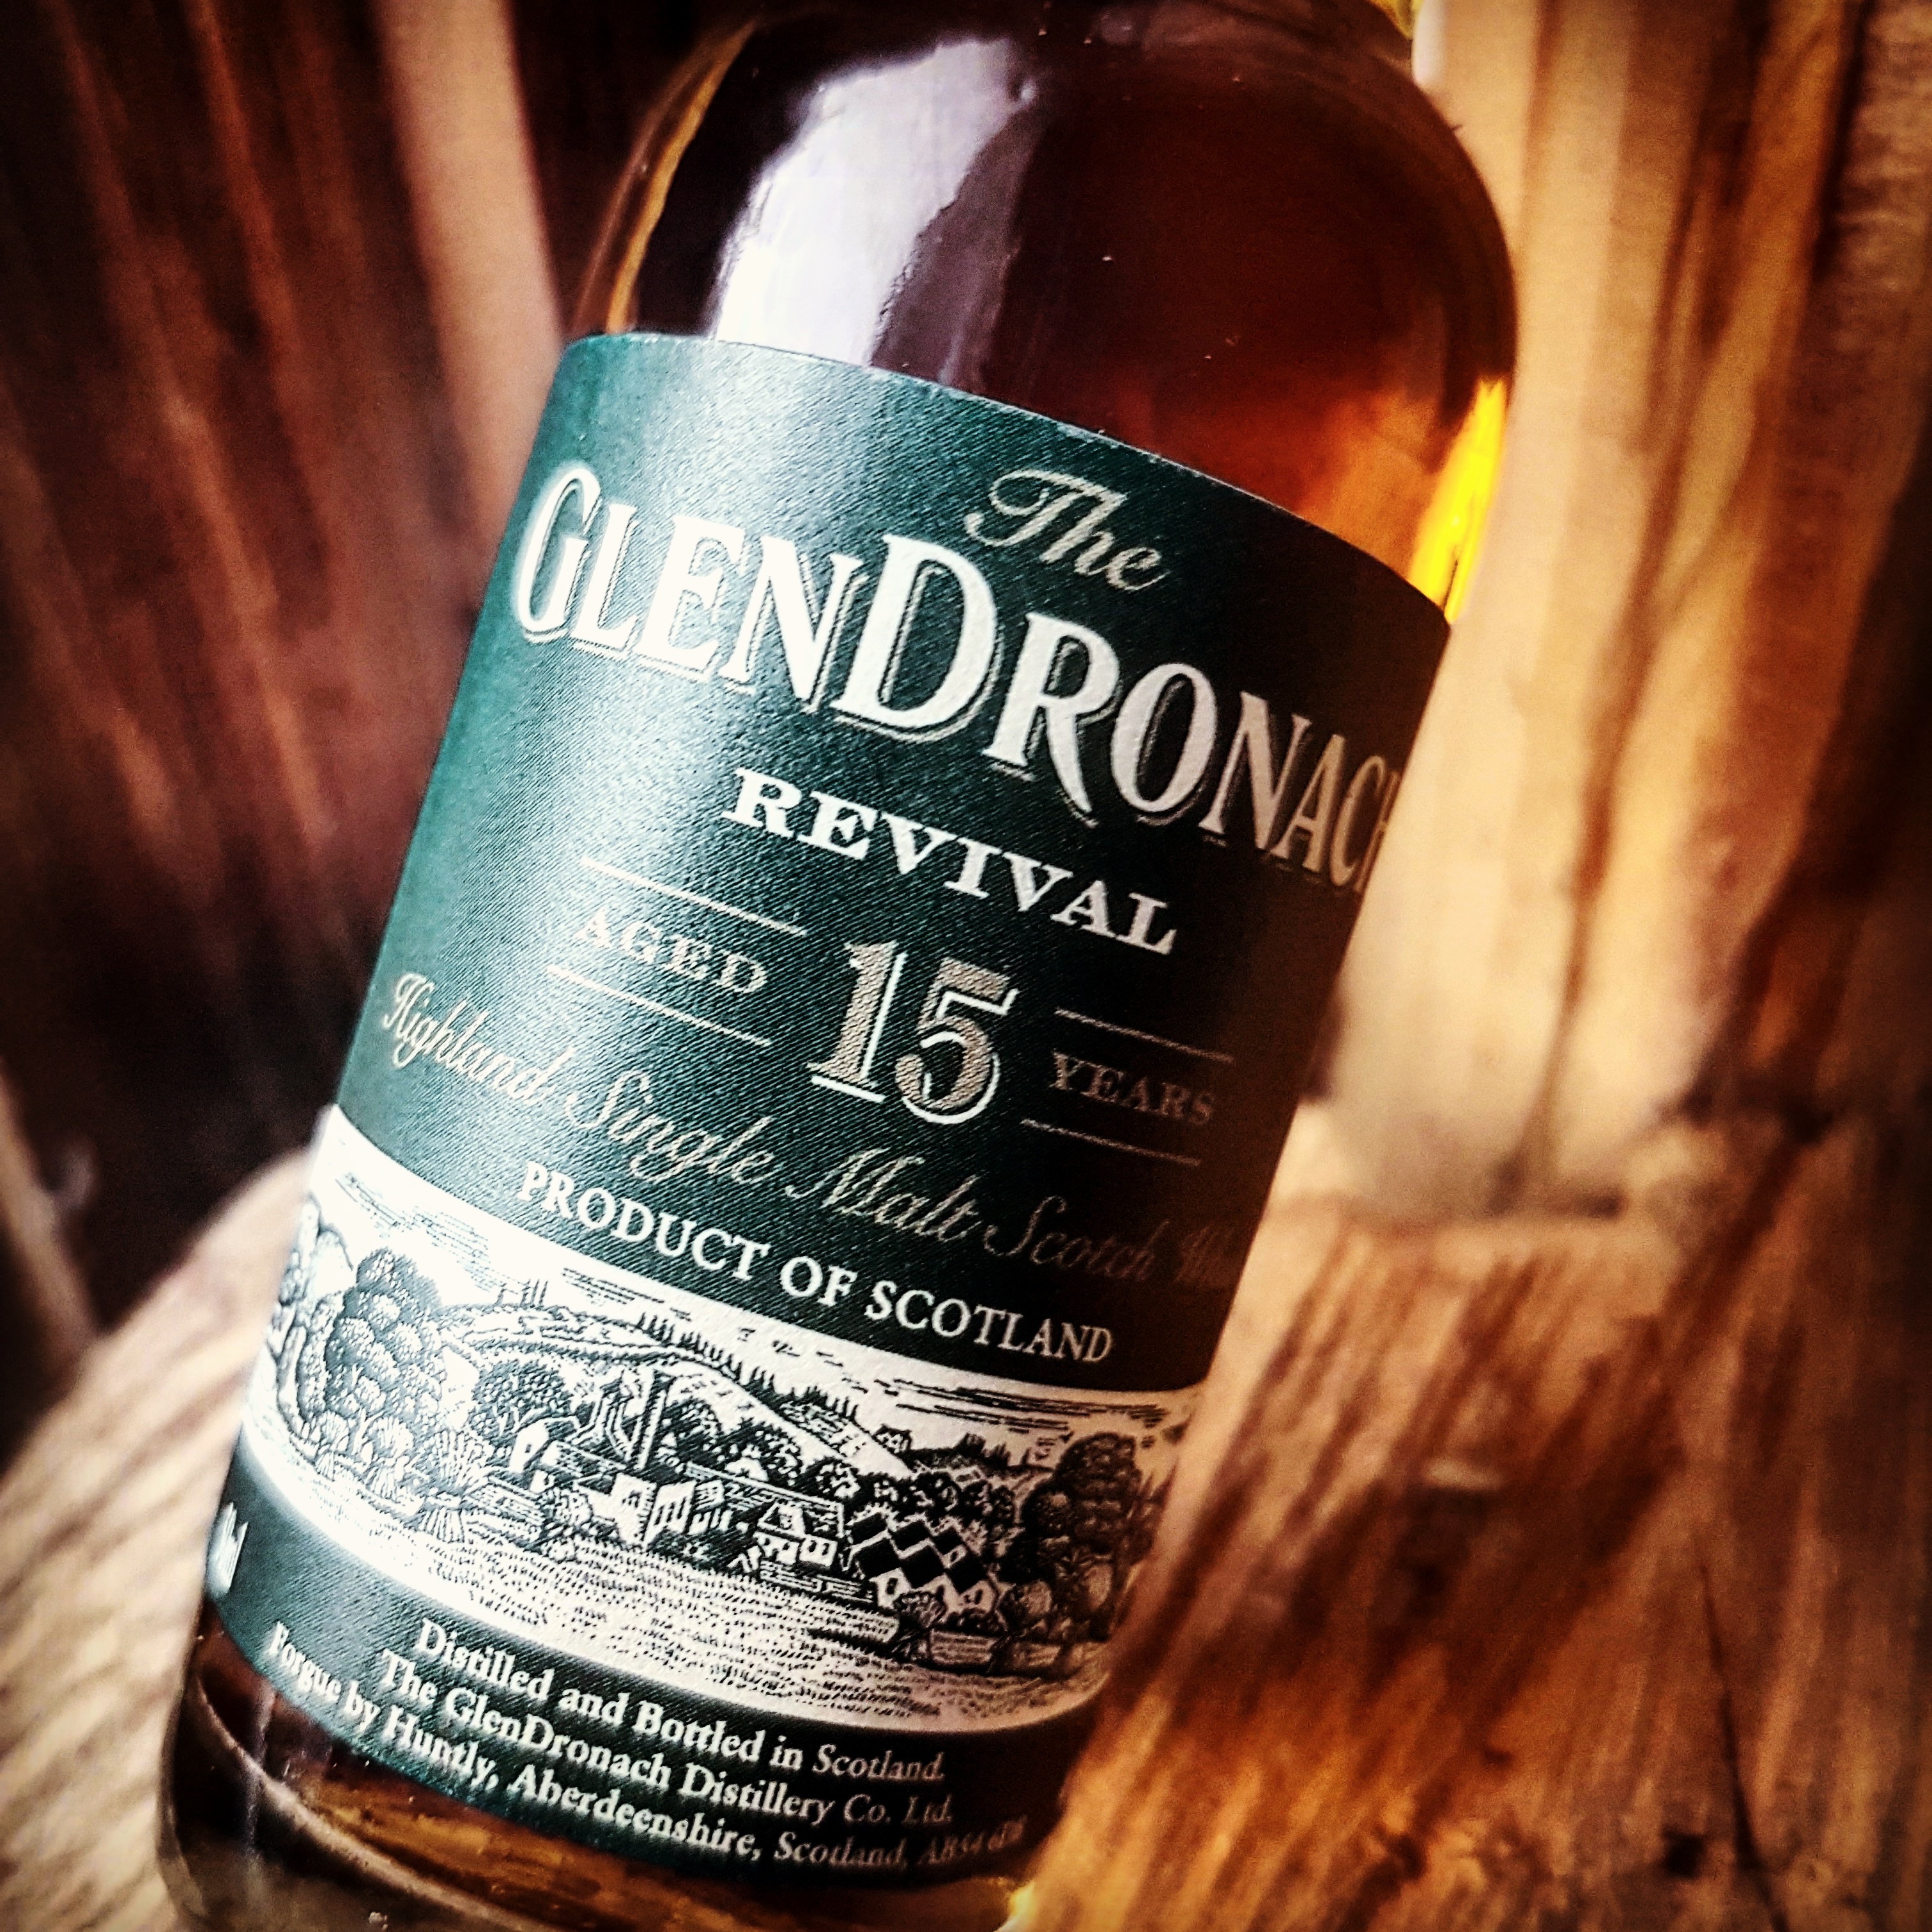 The GlenDronach Revival 15 Jahre Highland Single Malt Scotch Whisky